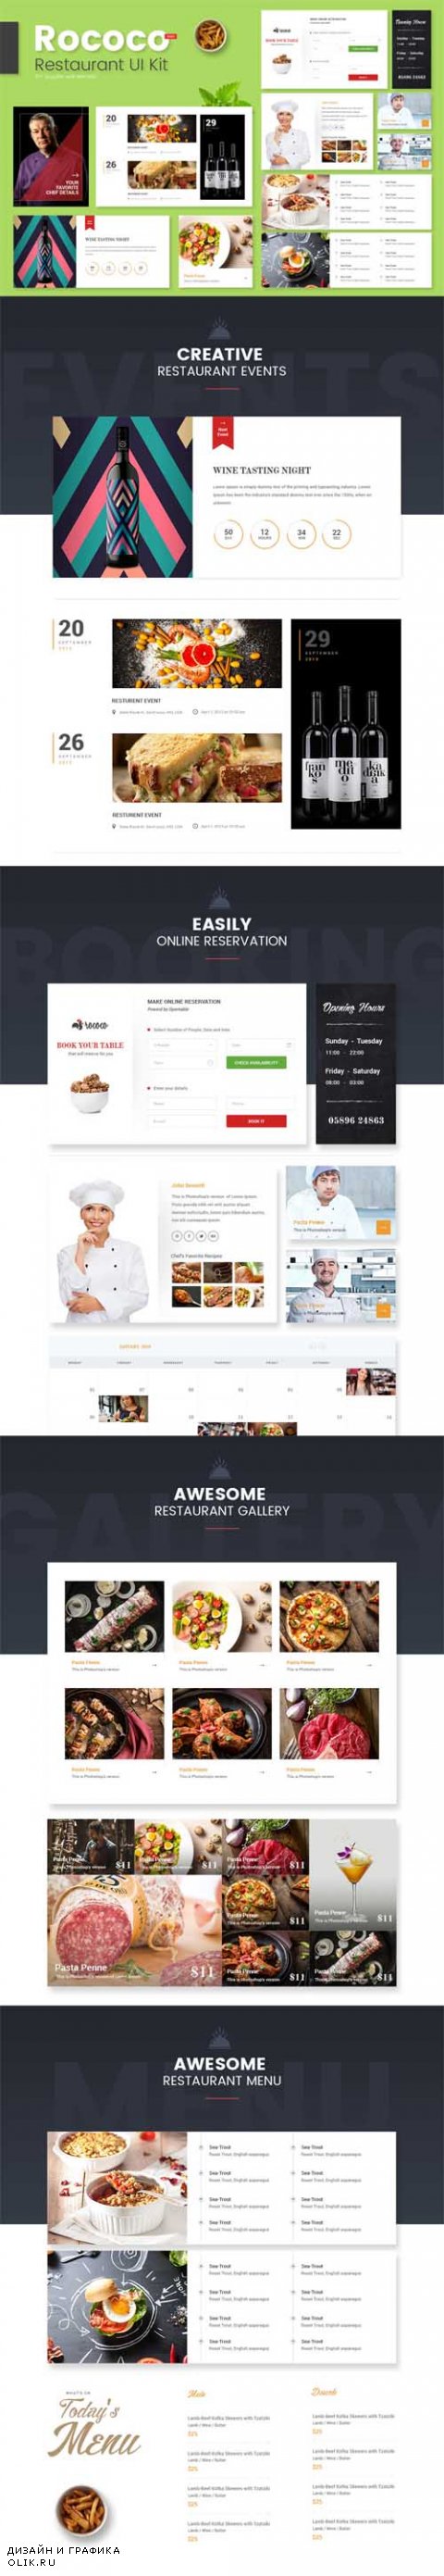 Rococo Restaurant Web UI Kit